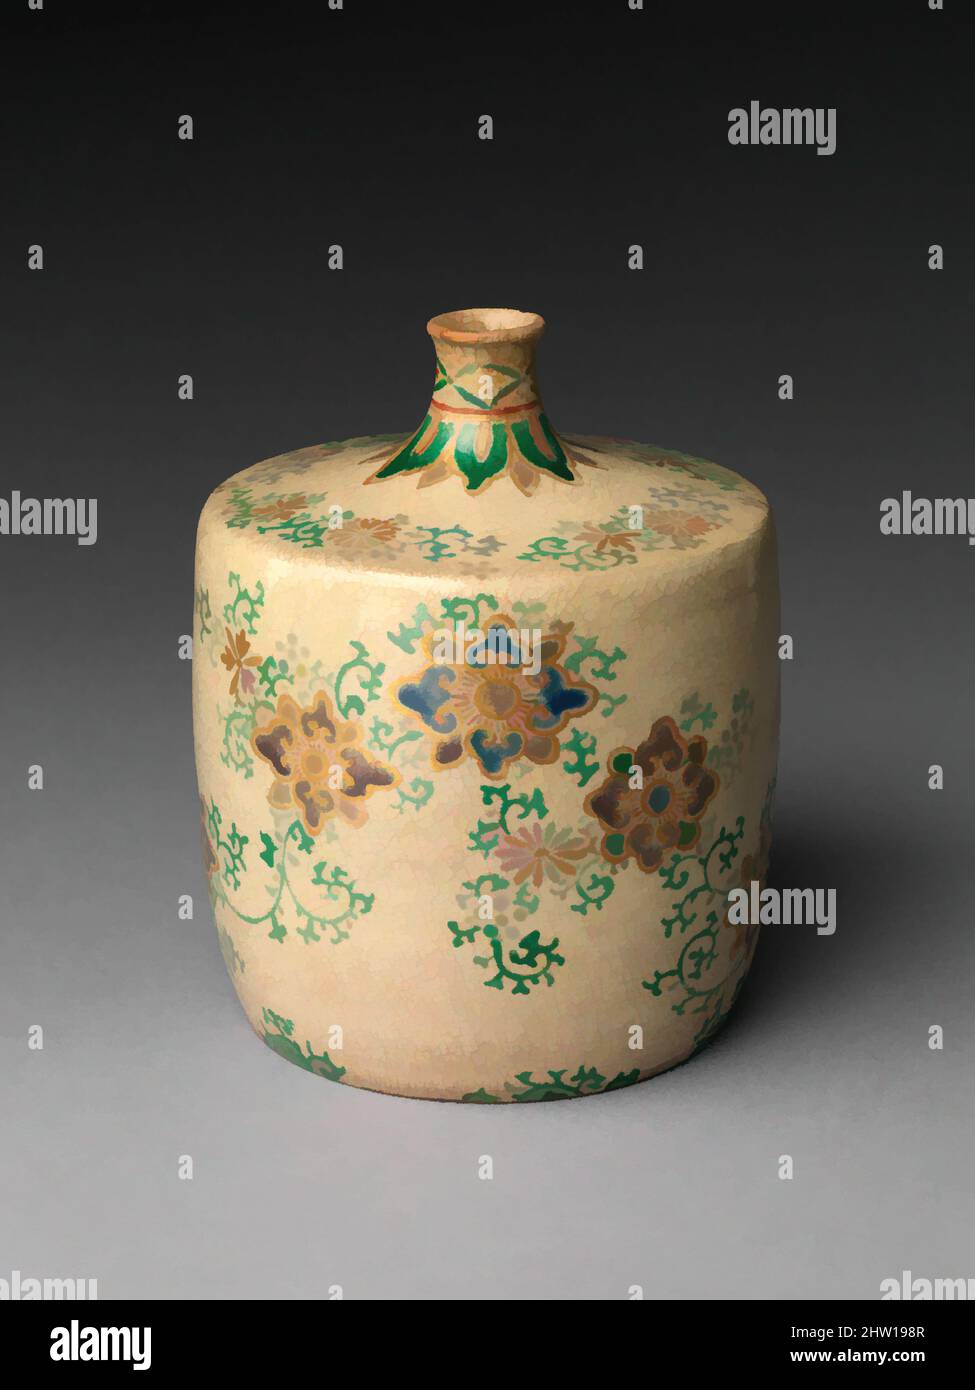 Sake bottle tokkuri hi-res stock photography and images - Alamy